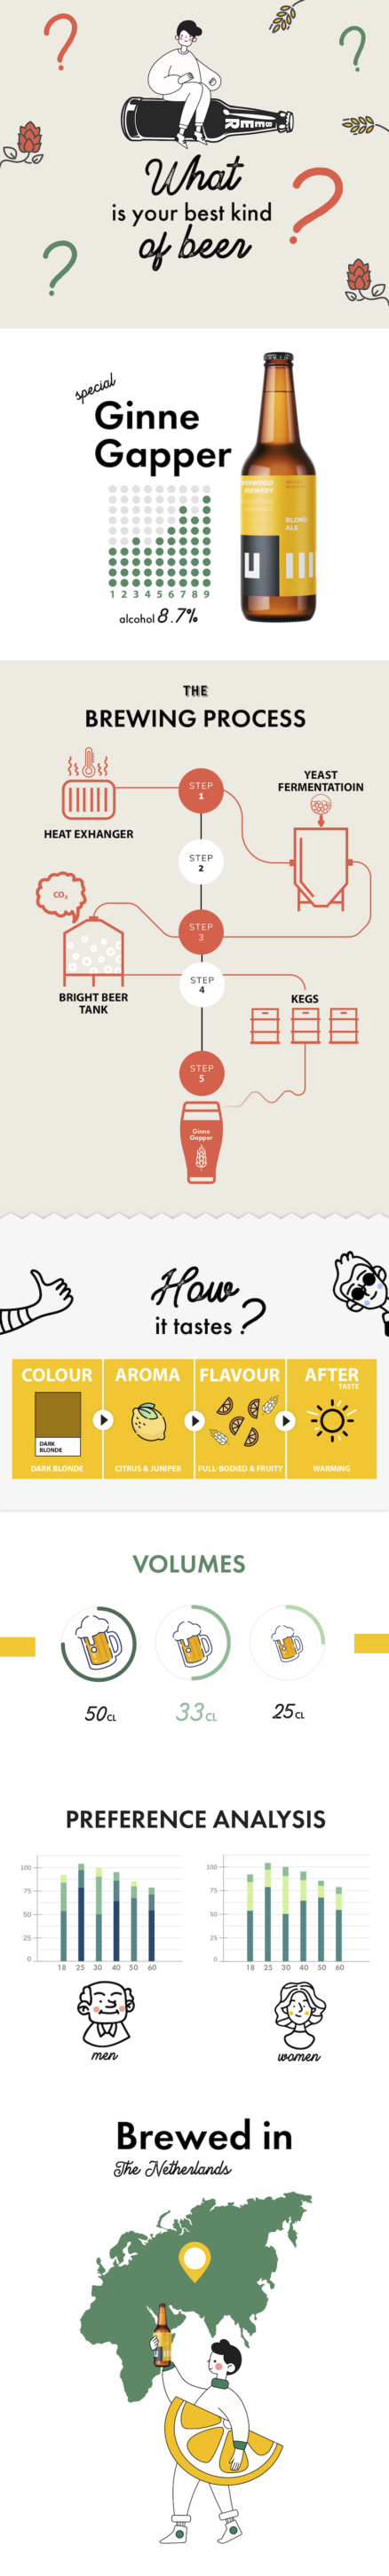 Infographic – Best kind of beer